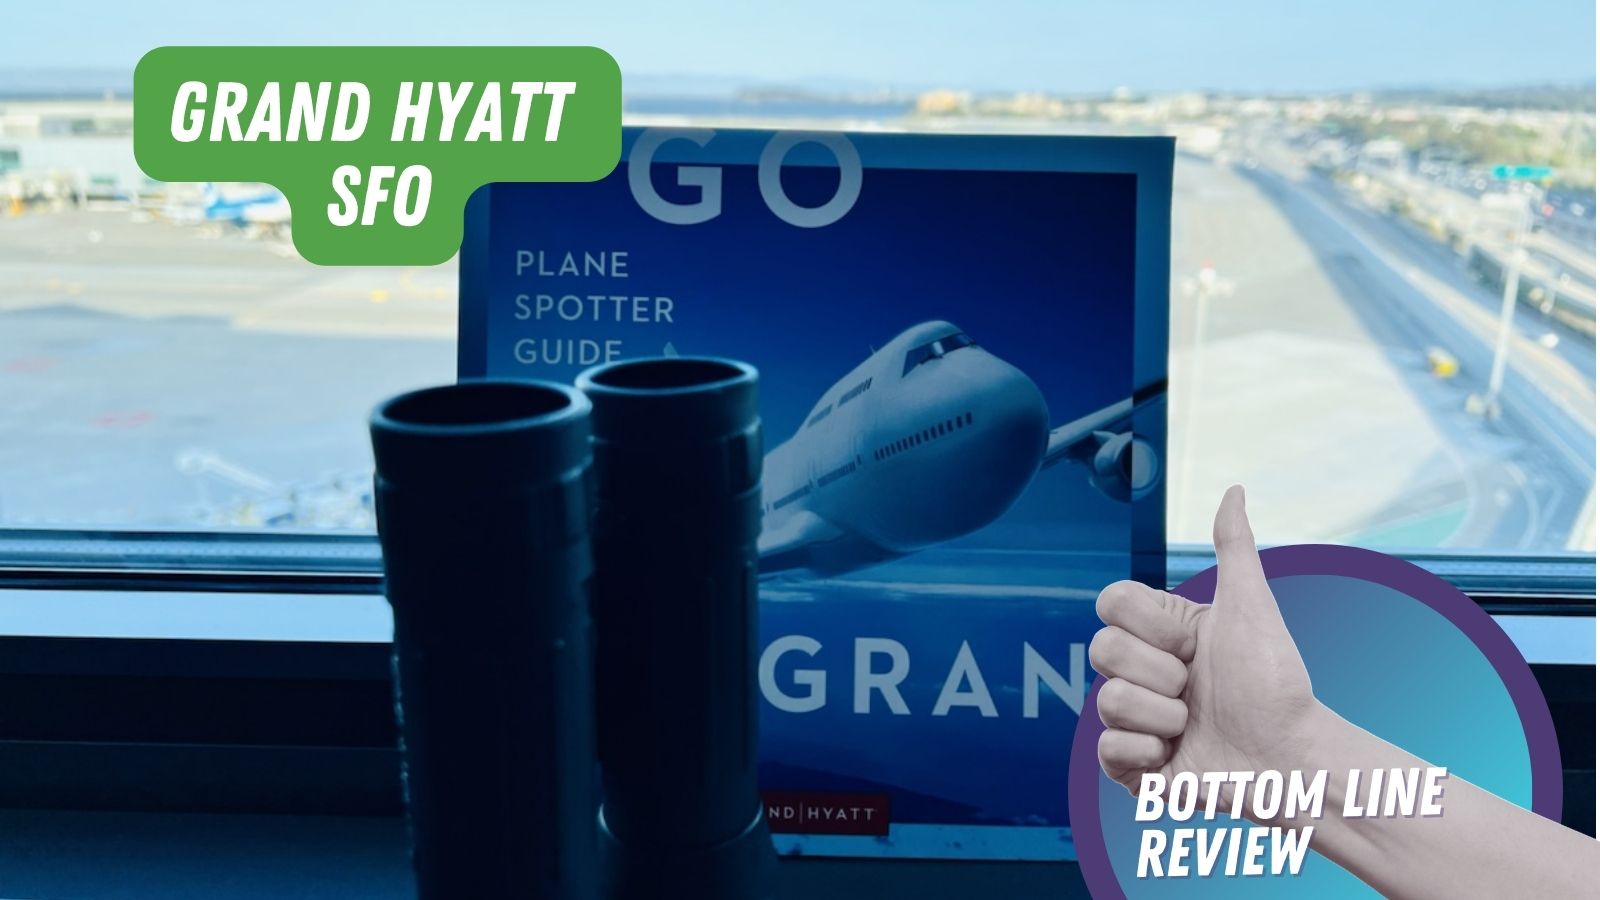 Grand Hyatt SFO: A terrific hotel connected to San Francisco’s airport